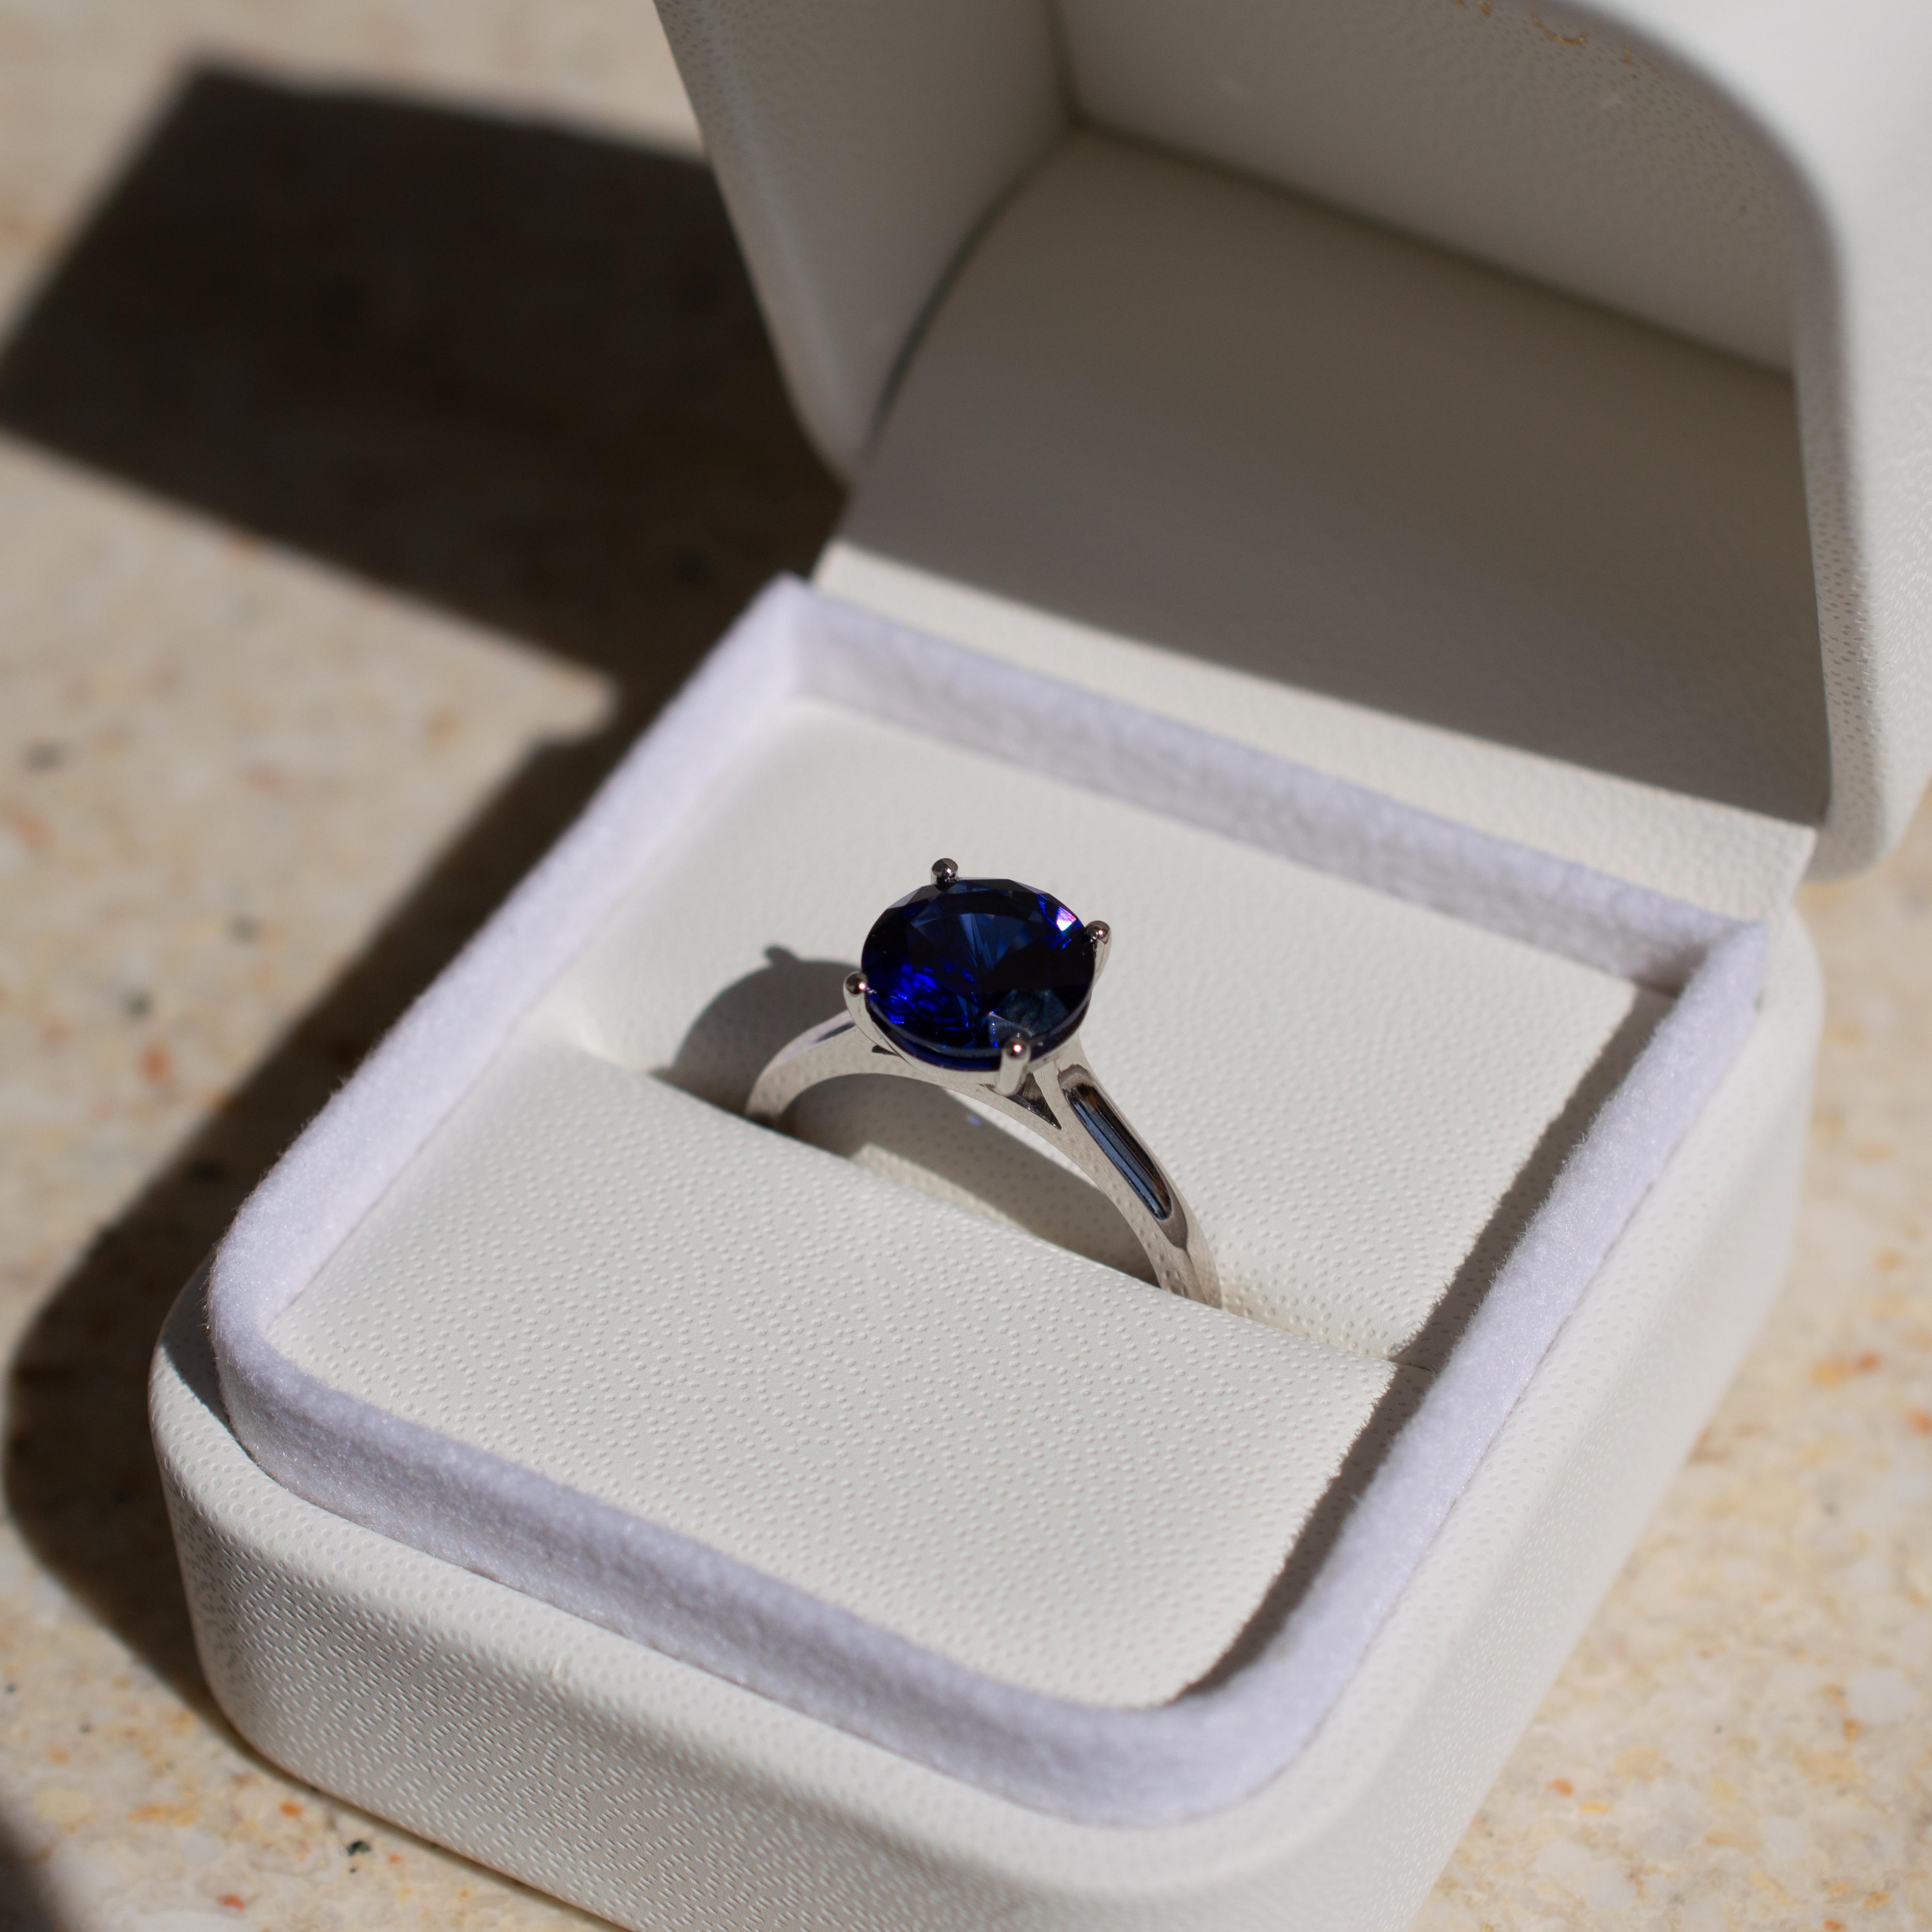 1.5 carat round brilliant dark blue sapphire engagement ring in a platinum band